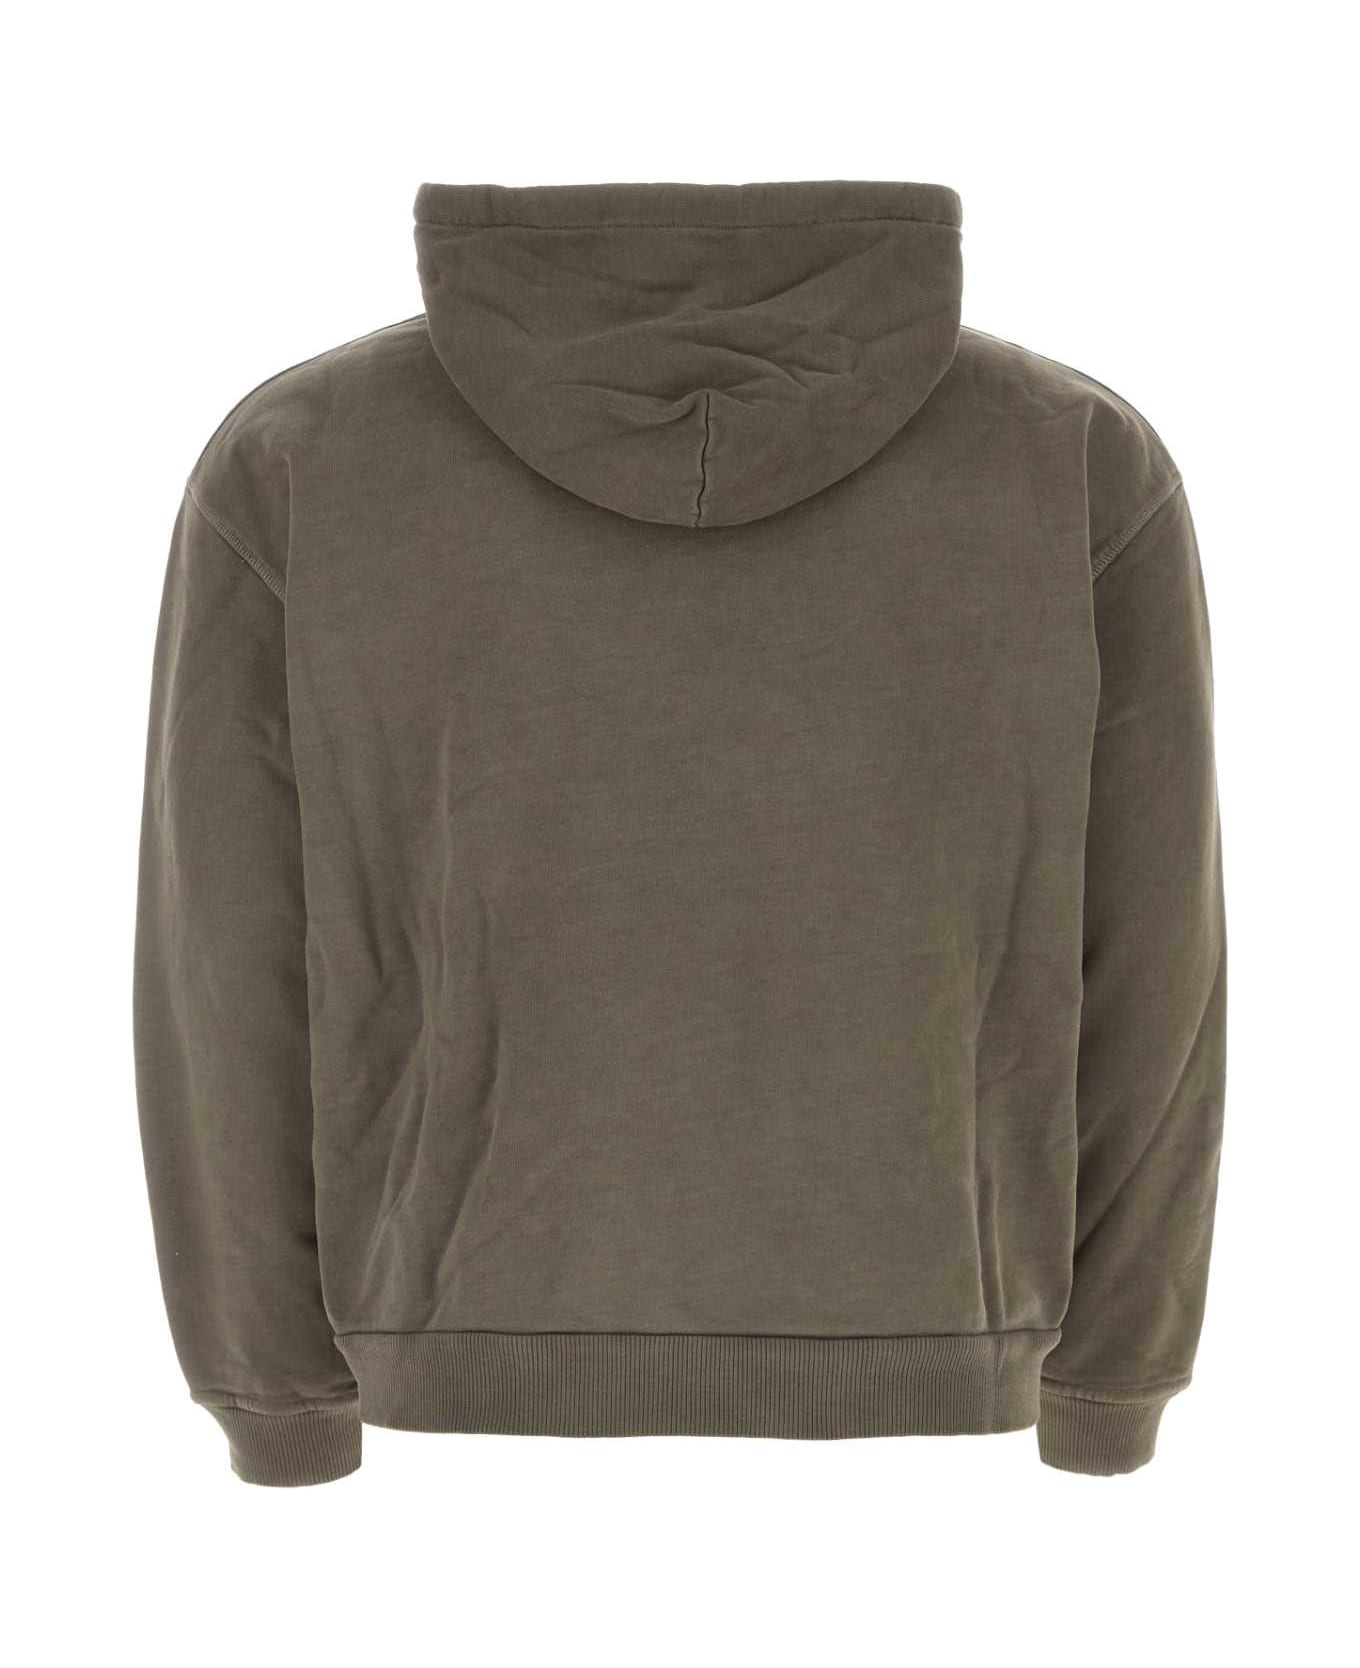 Nanushka Dark Grey Cotton Sweatshirt - ASPHALT